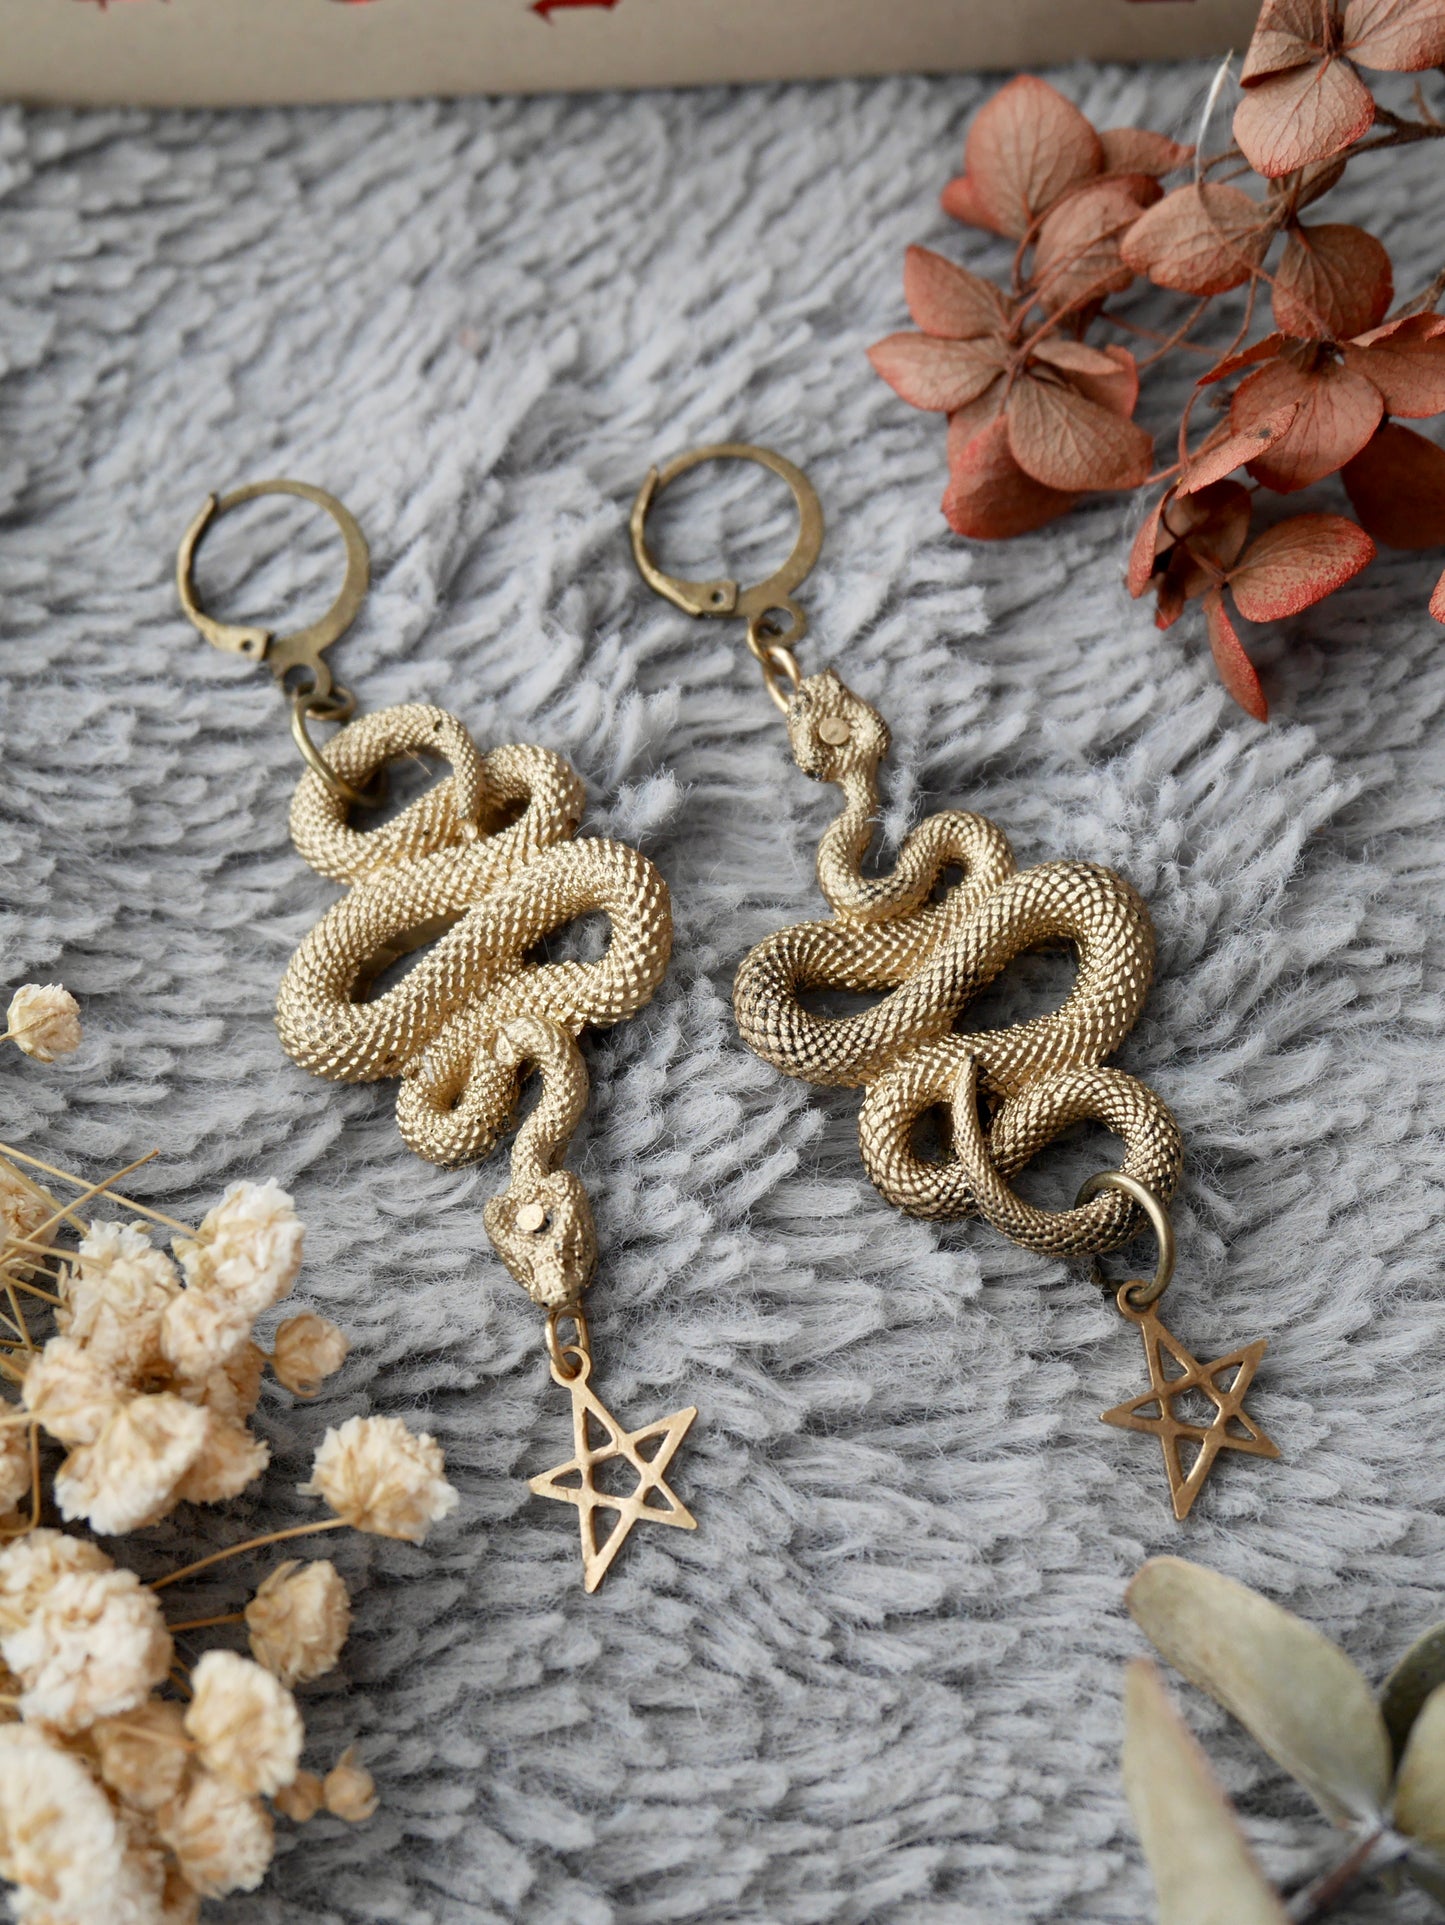 The Serpent Earrings